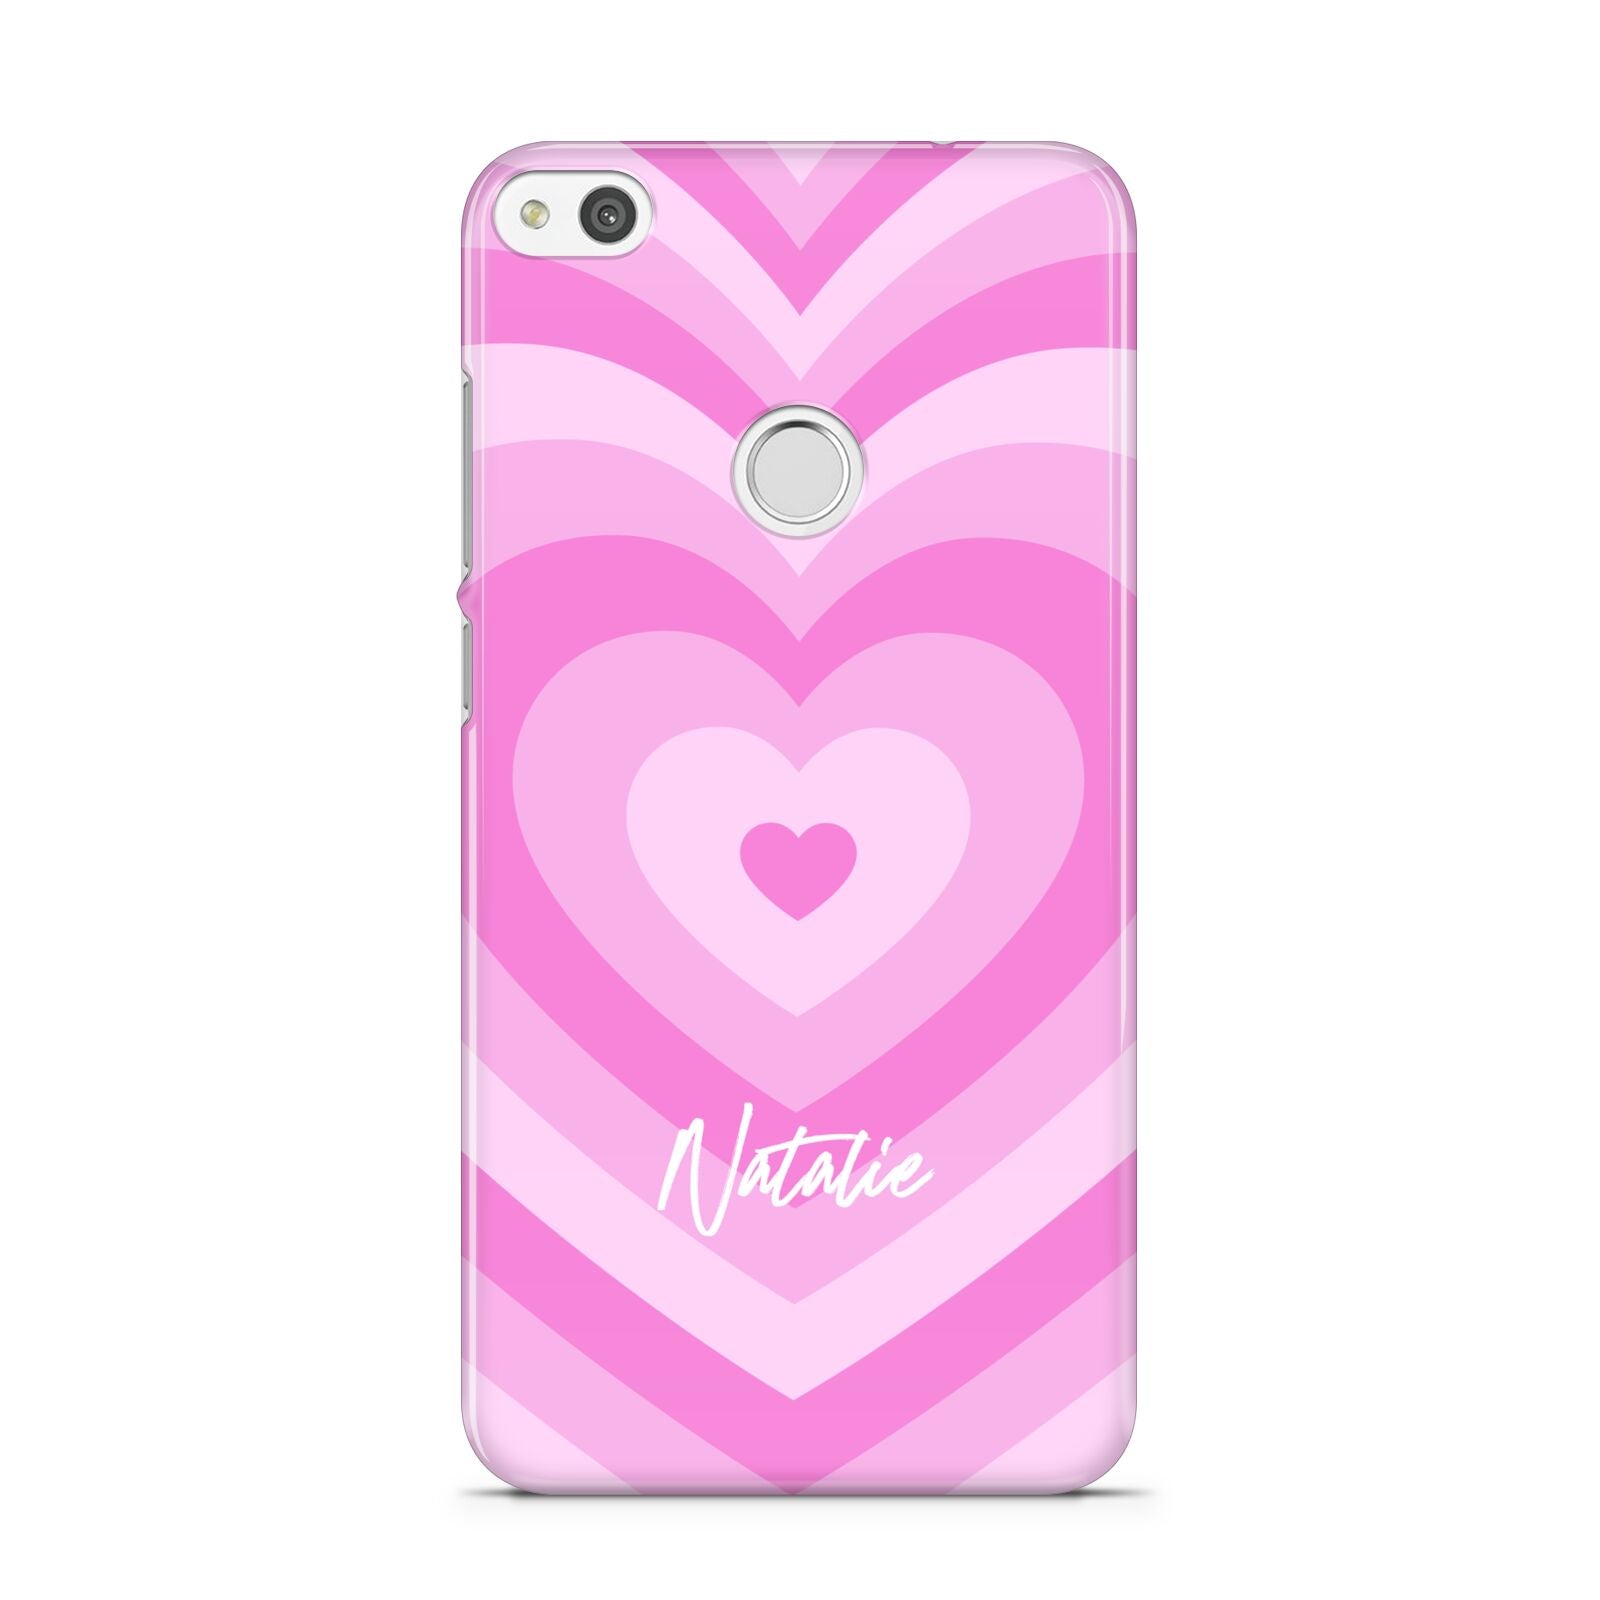 Personalised Pink Heart Huawei P8 Lite Case